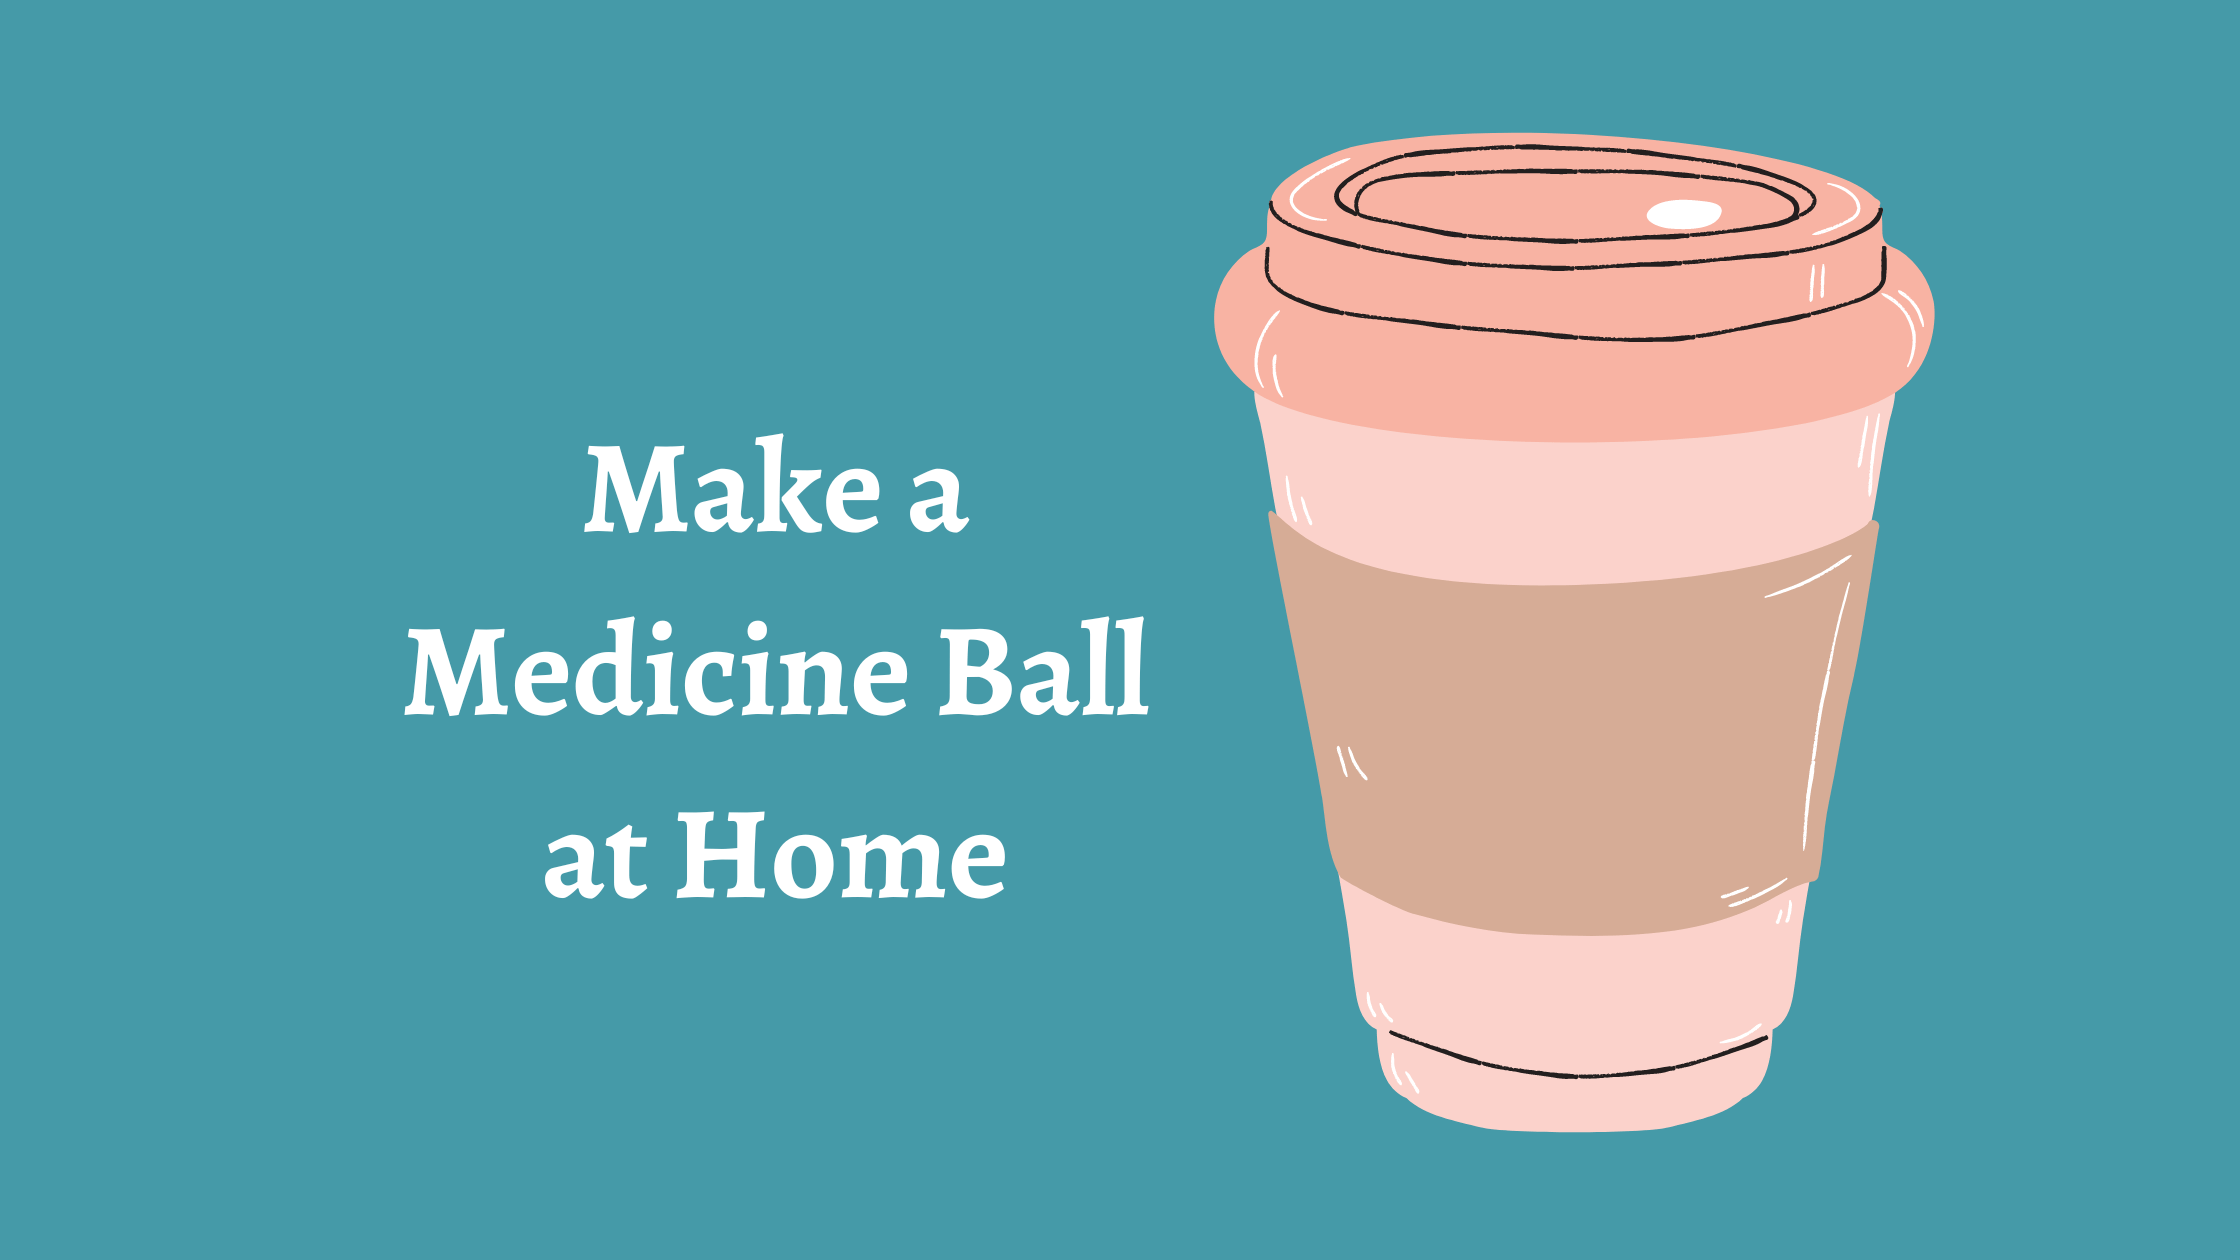 Make a Medicine Ball at Home